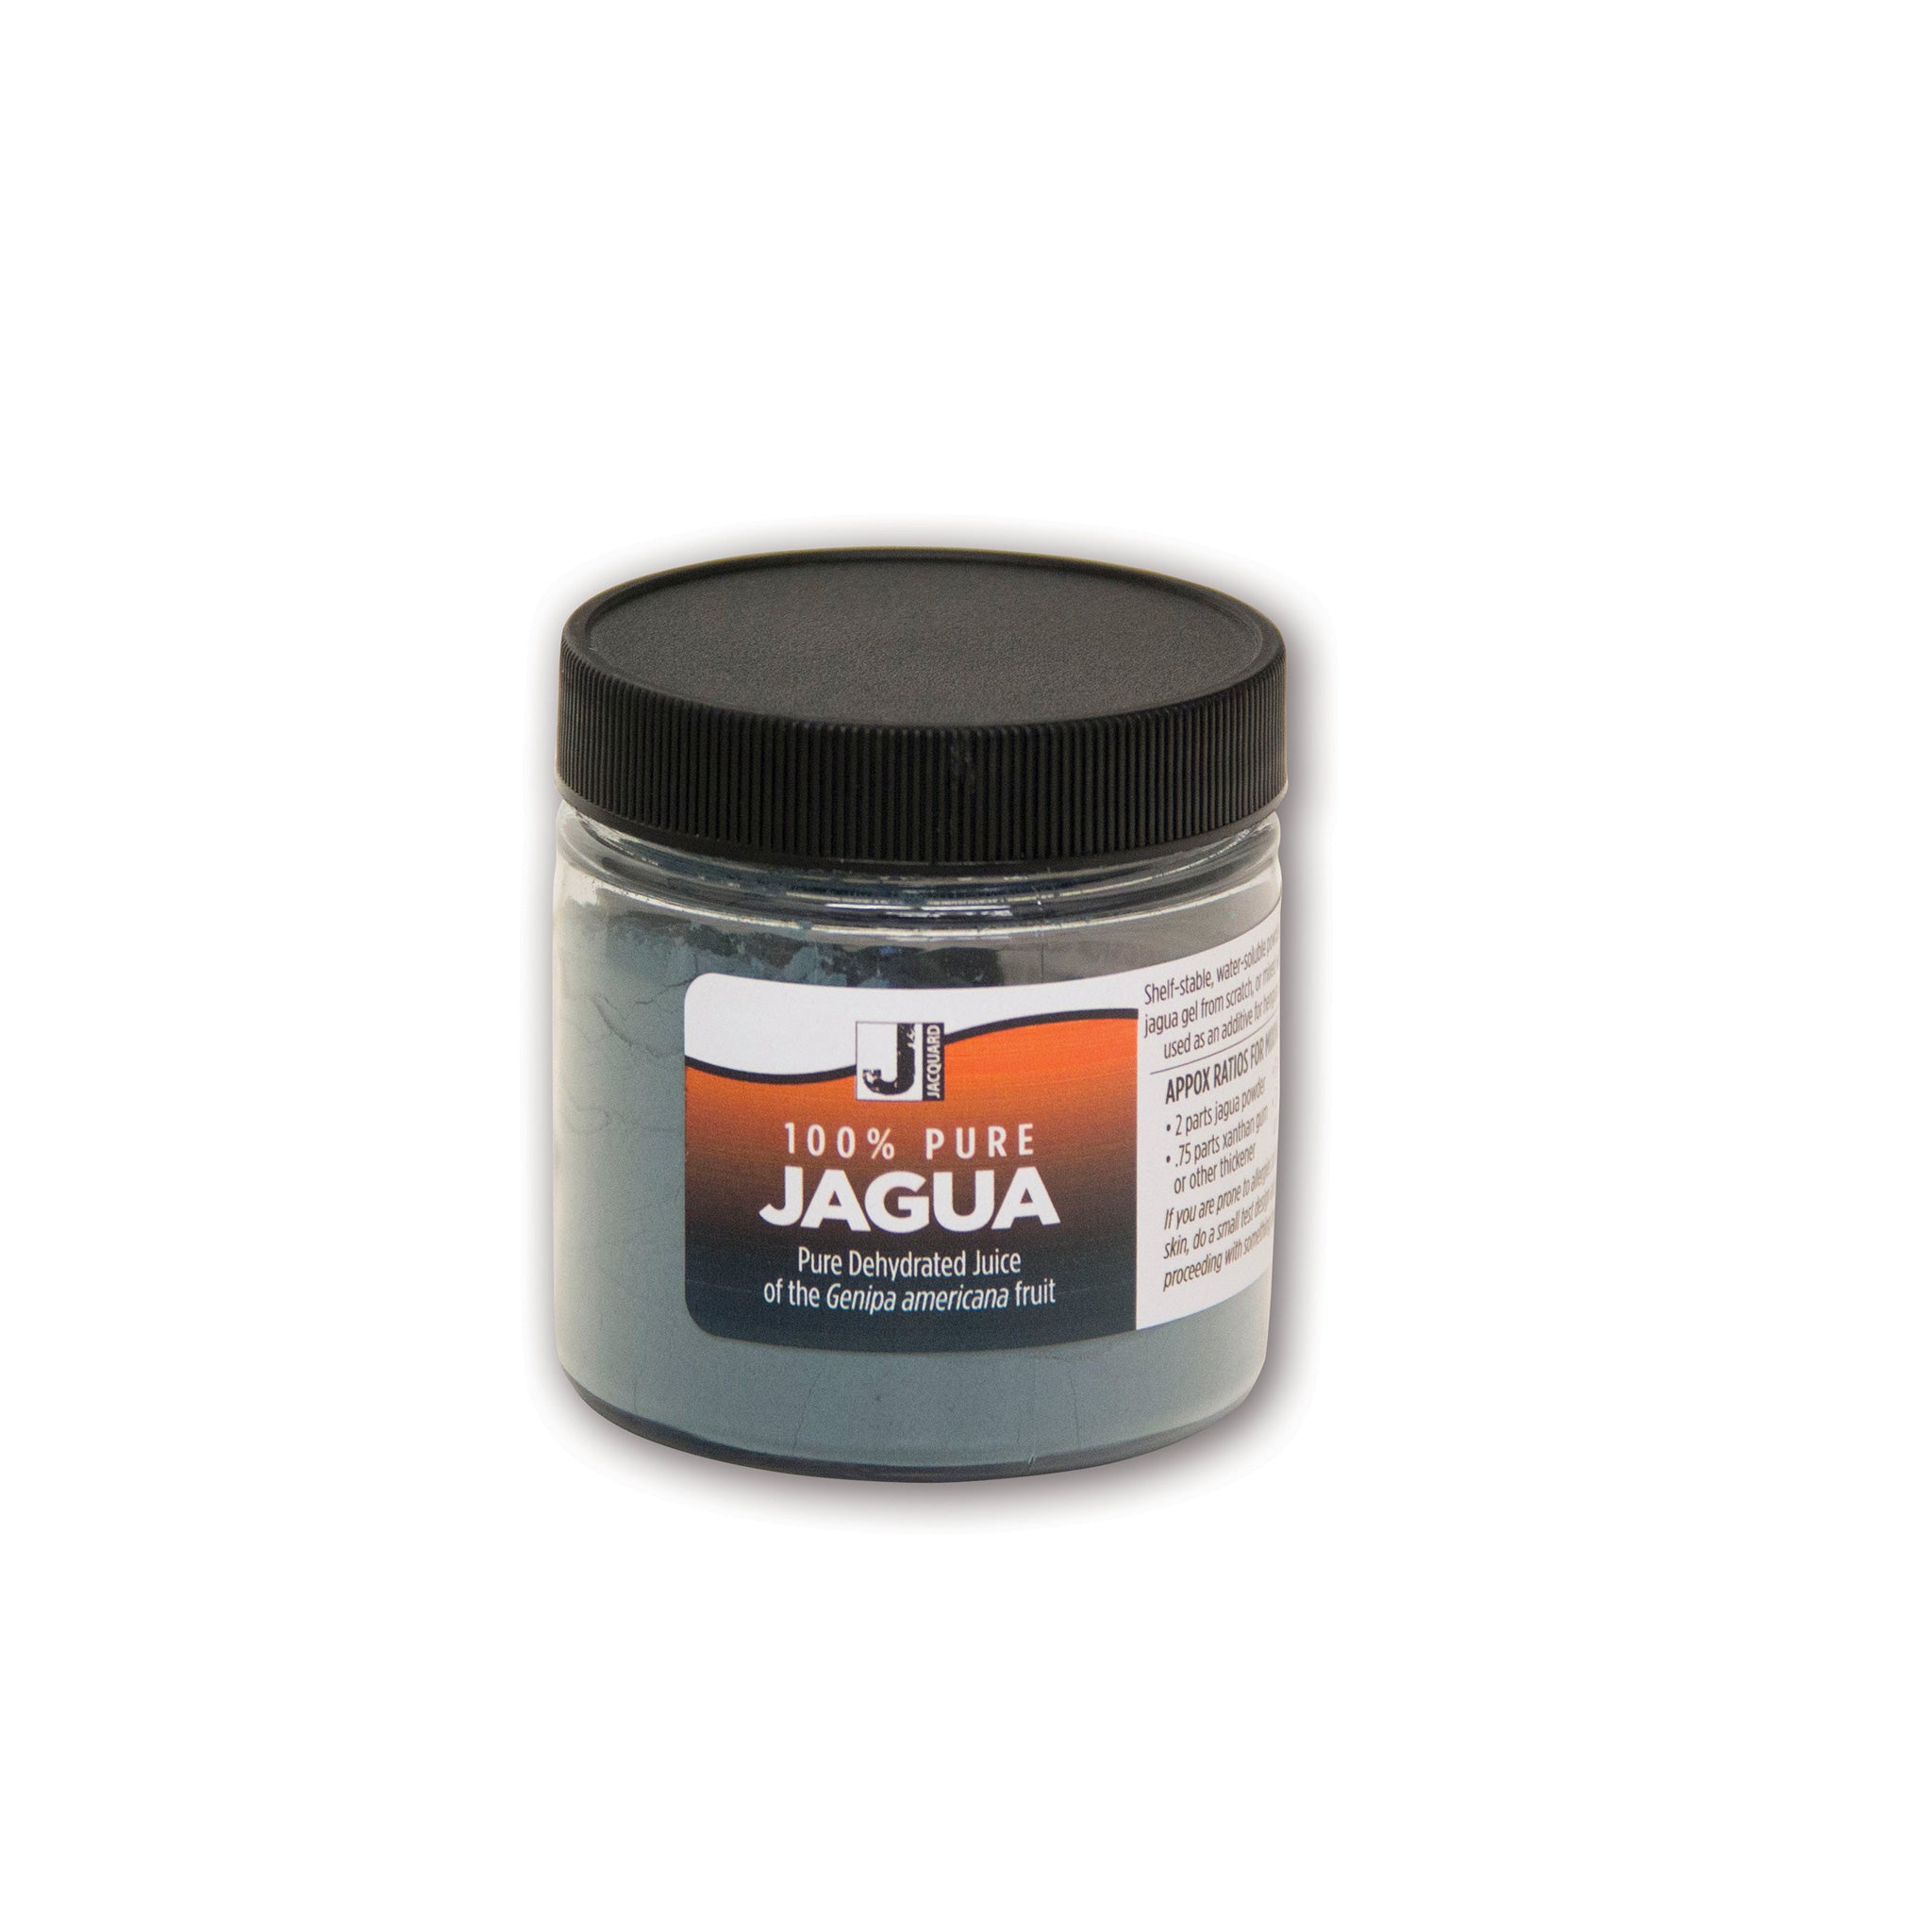 Jagua - 100% Pure (1 oz)